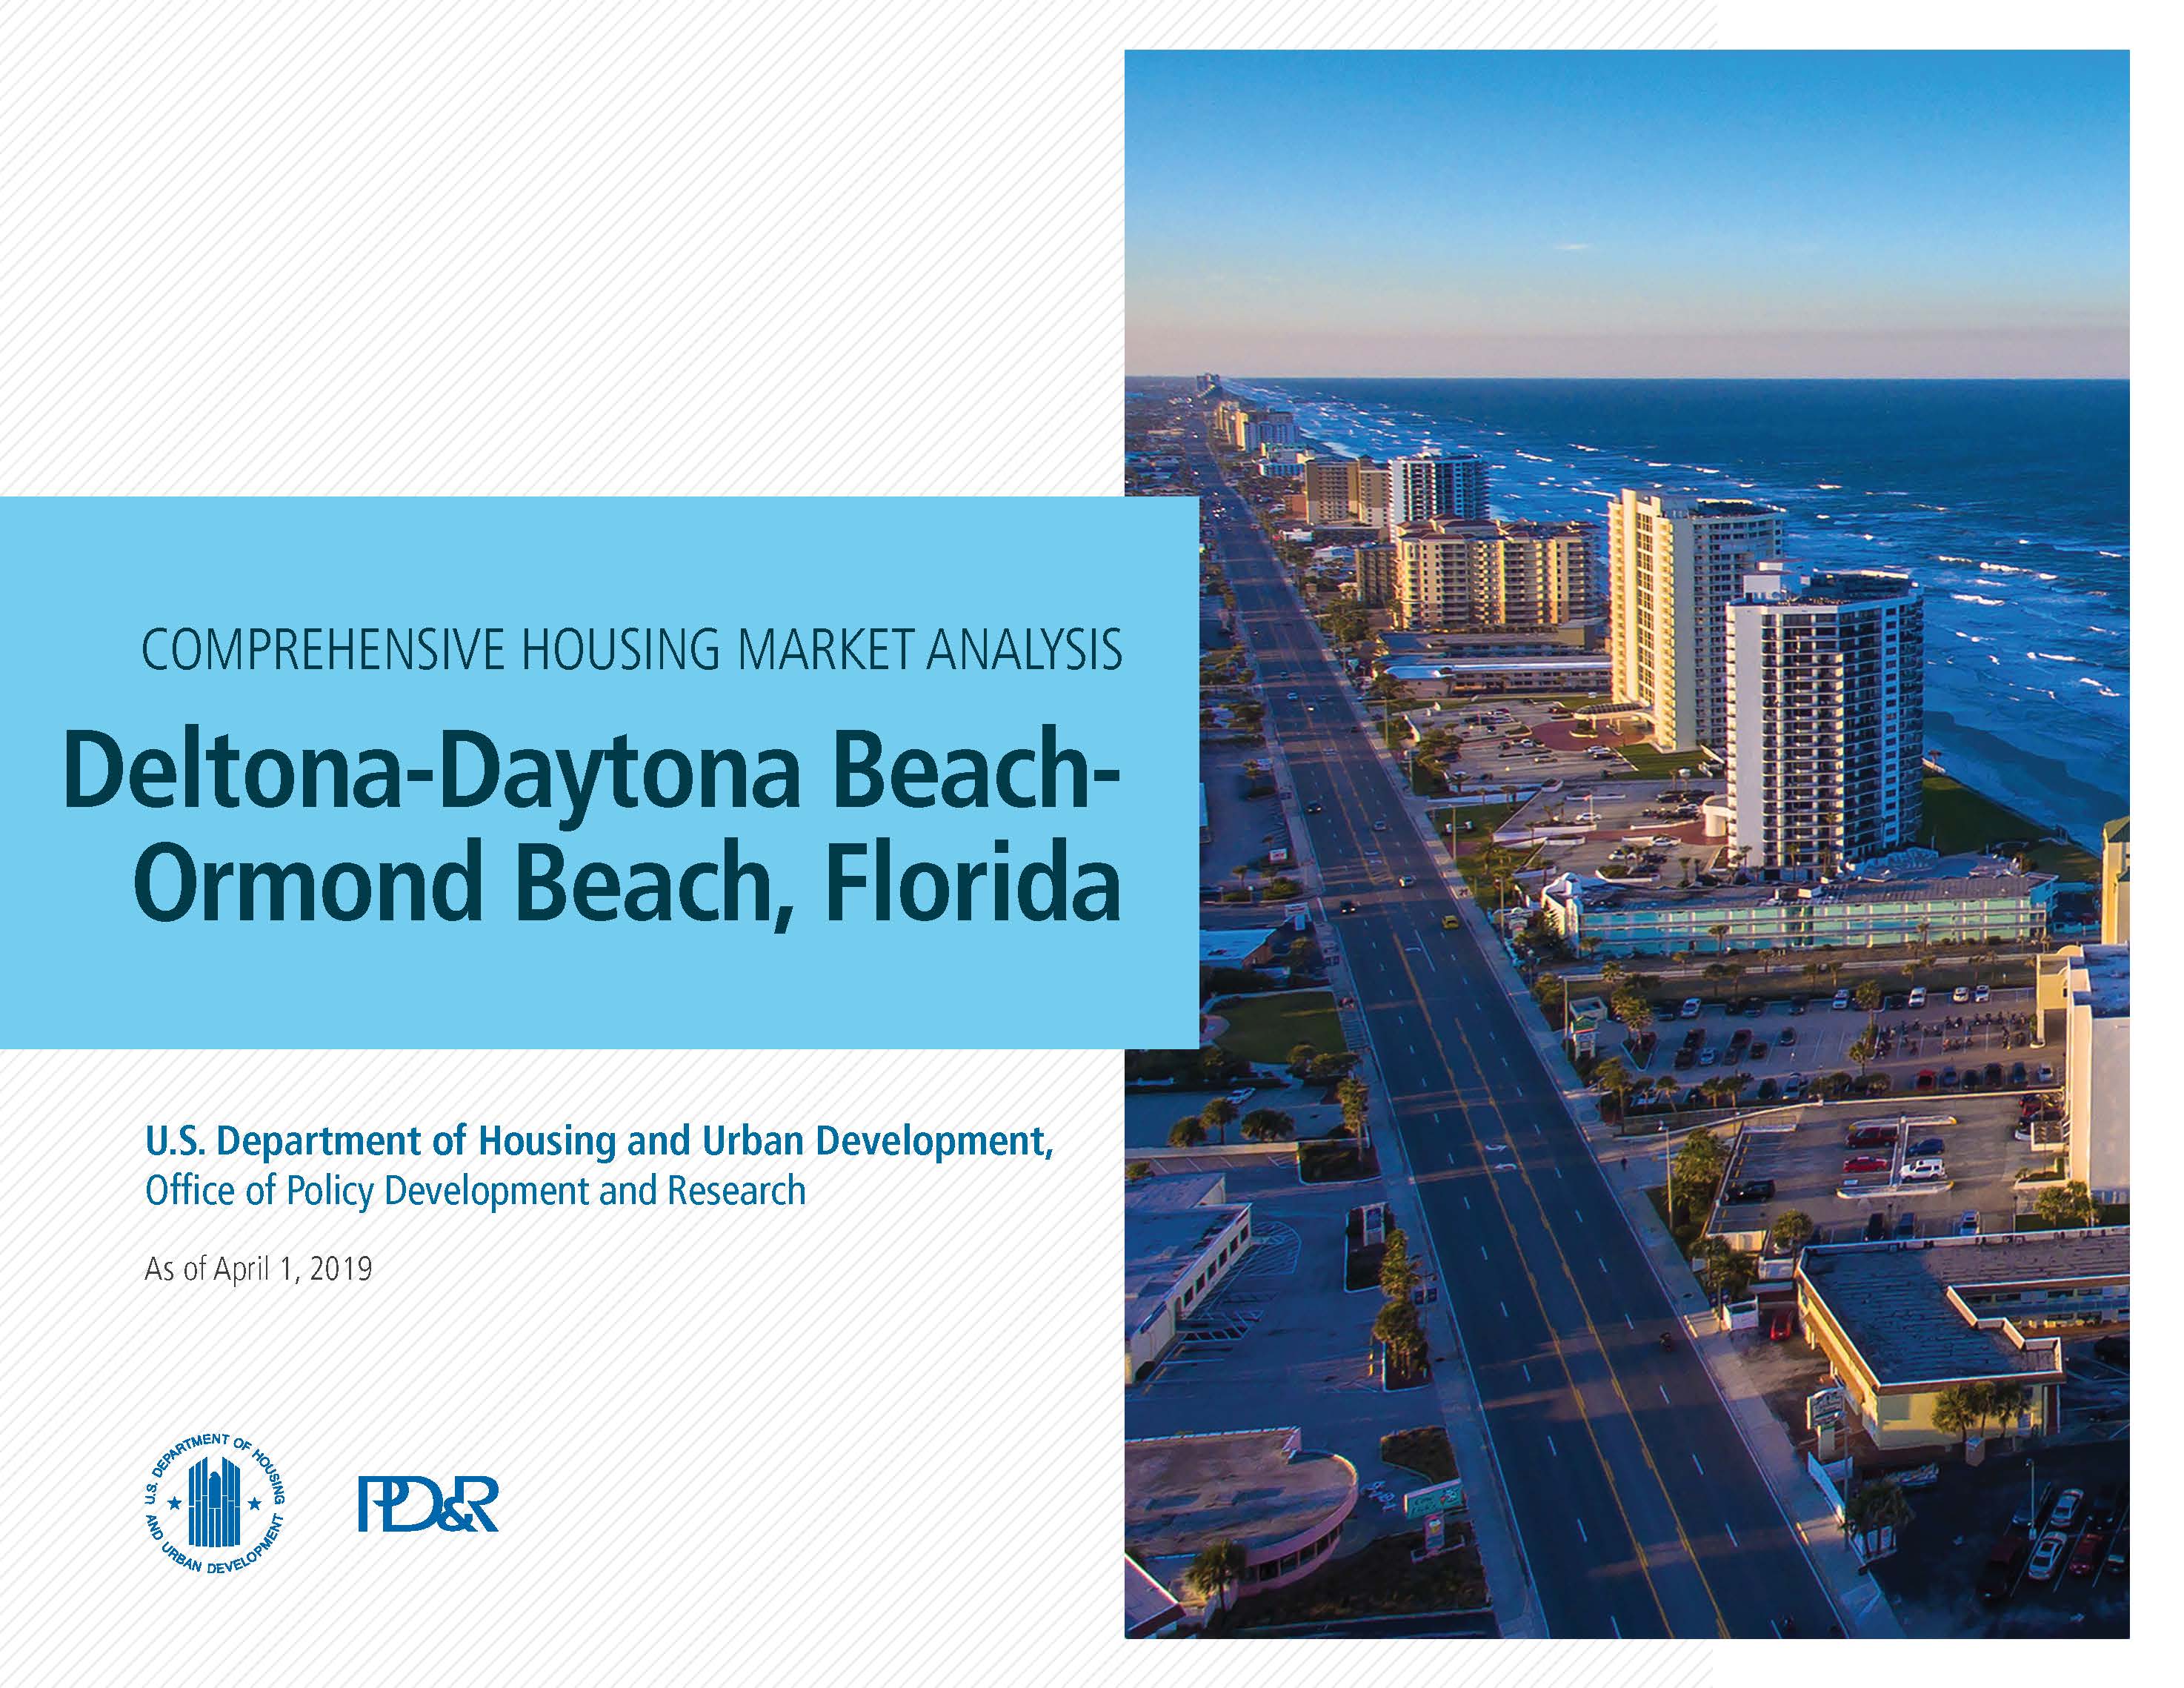 Deltona Daytona Beach Ormond Beach Housing Market Analysis Report cover